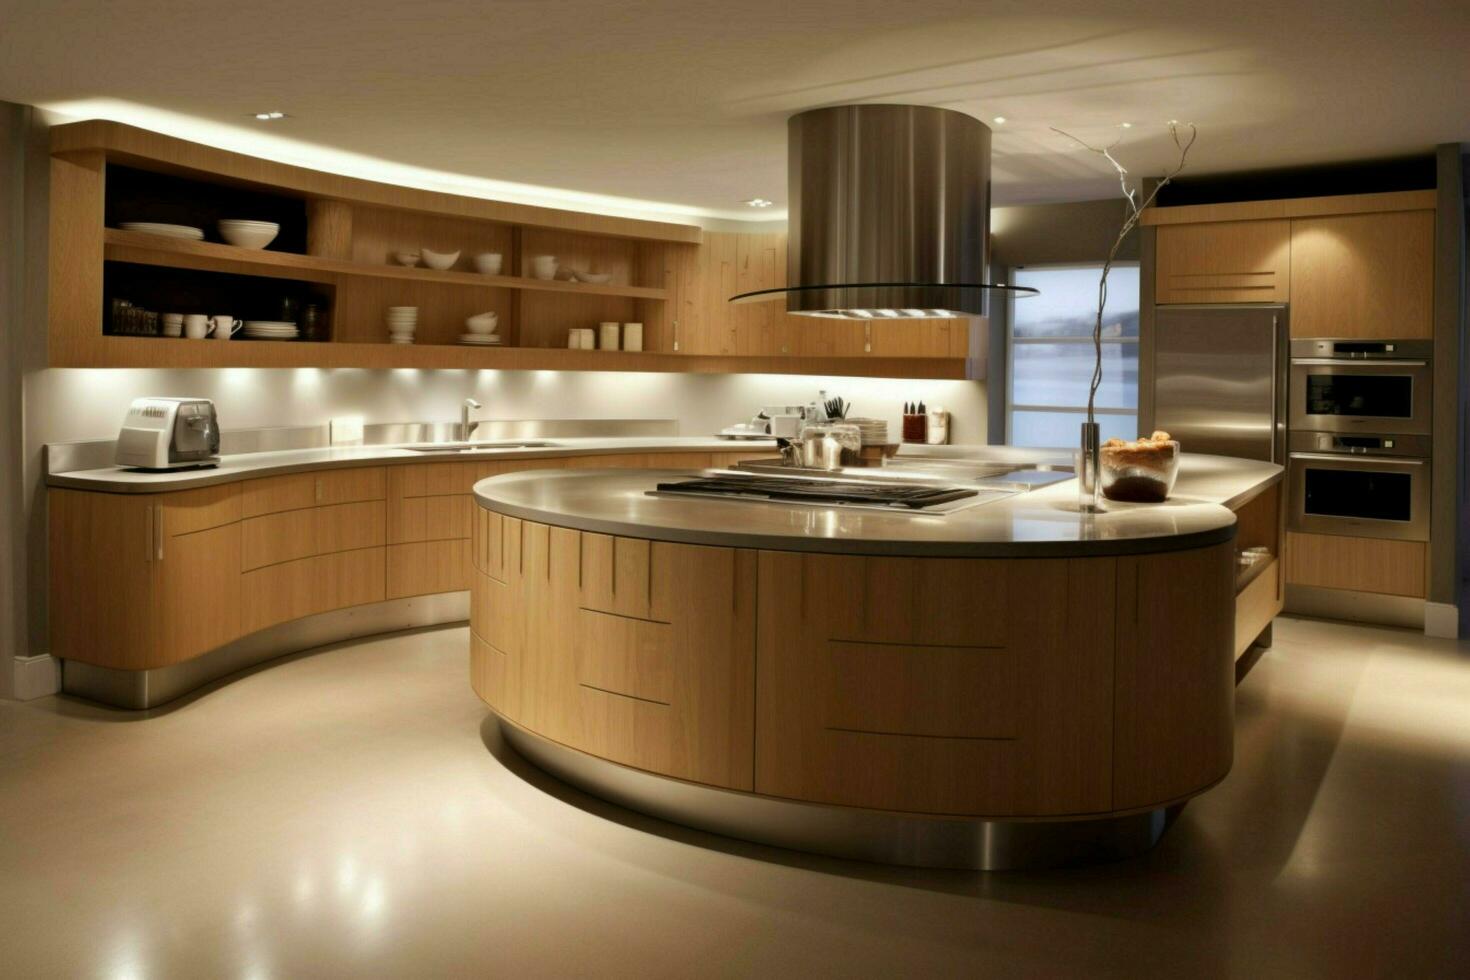 luxury domestic kitchen with elegant wooden design photo